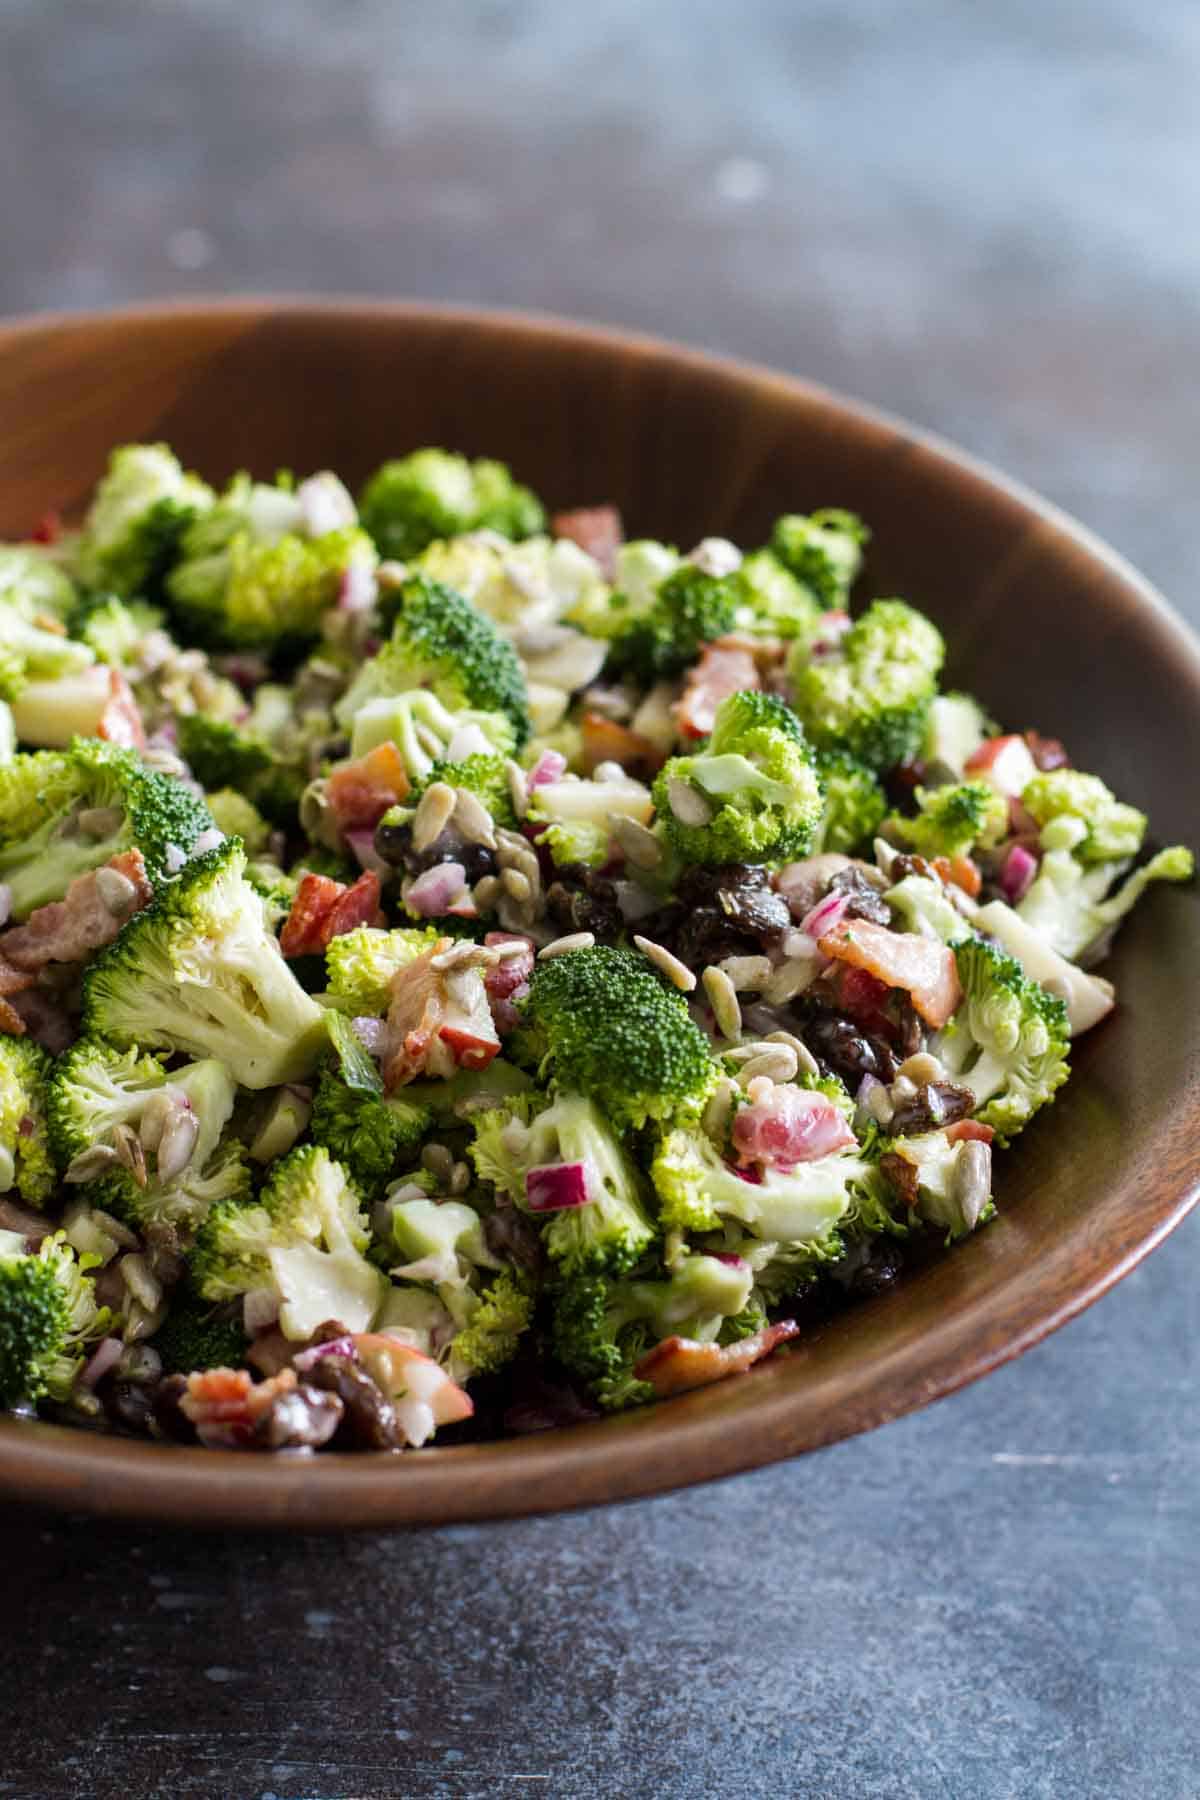 Recipe of Broccoli Salad Recipes With Bacon